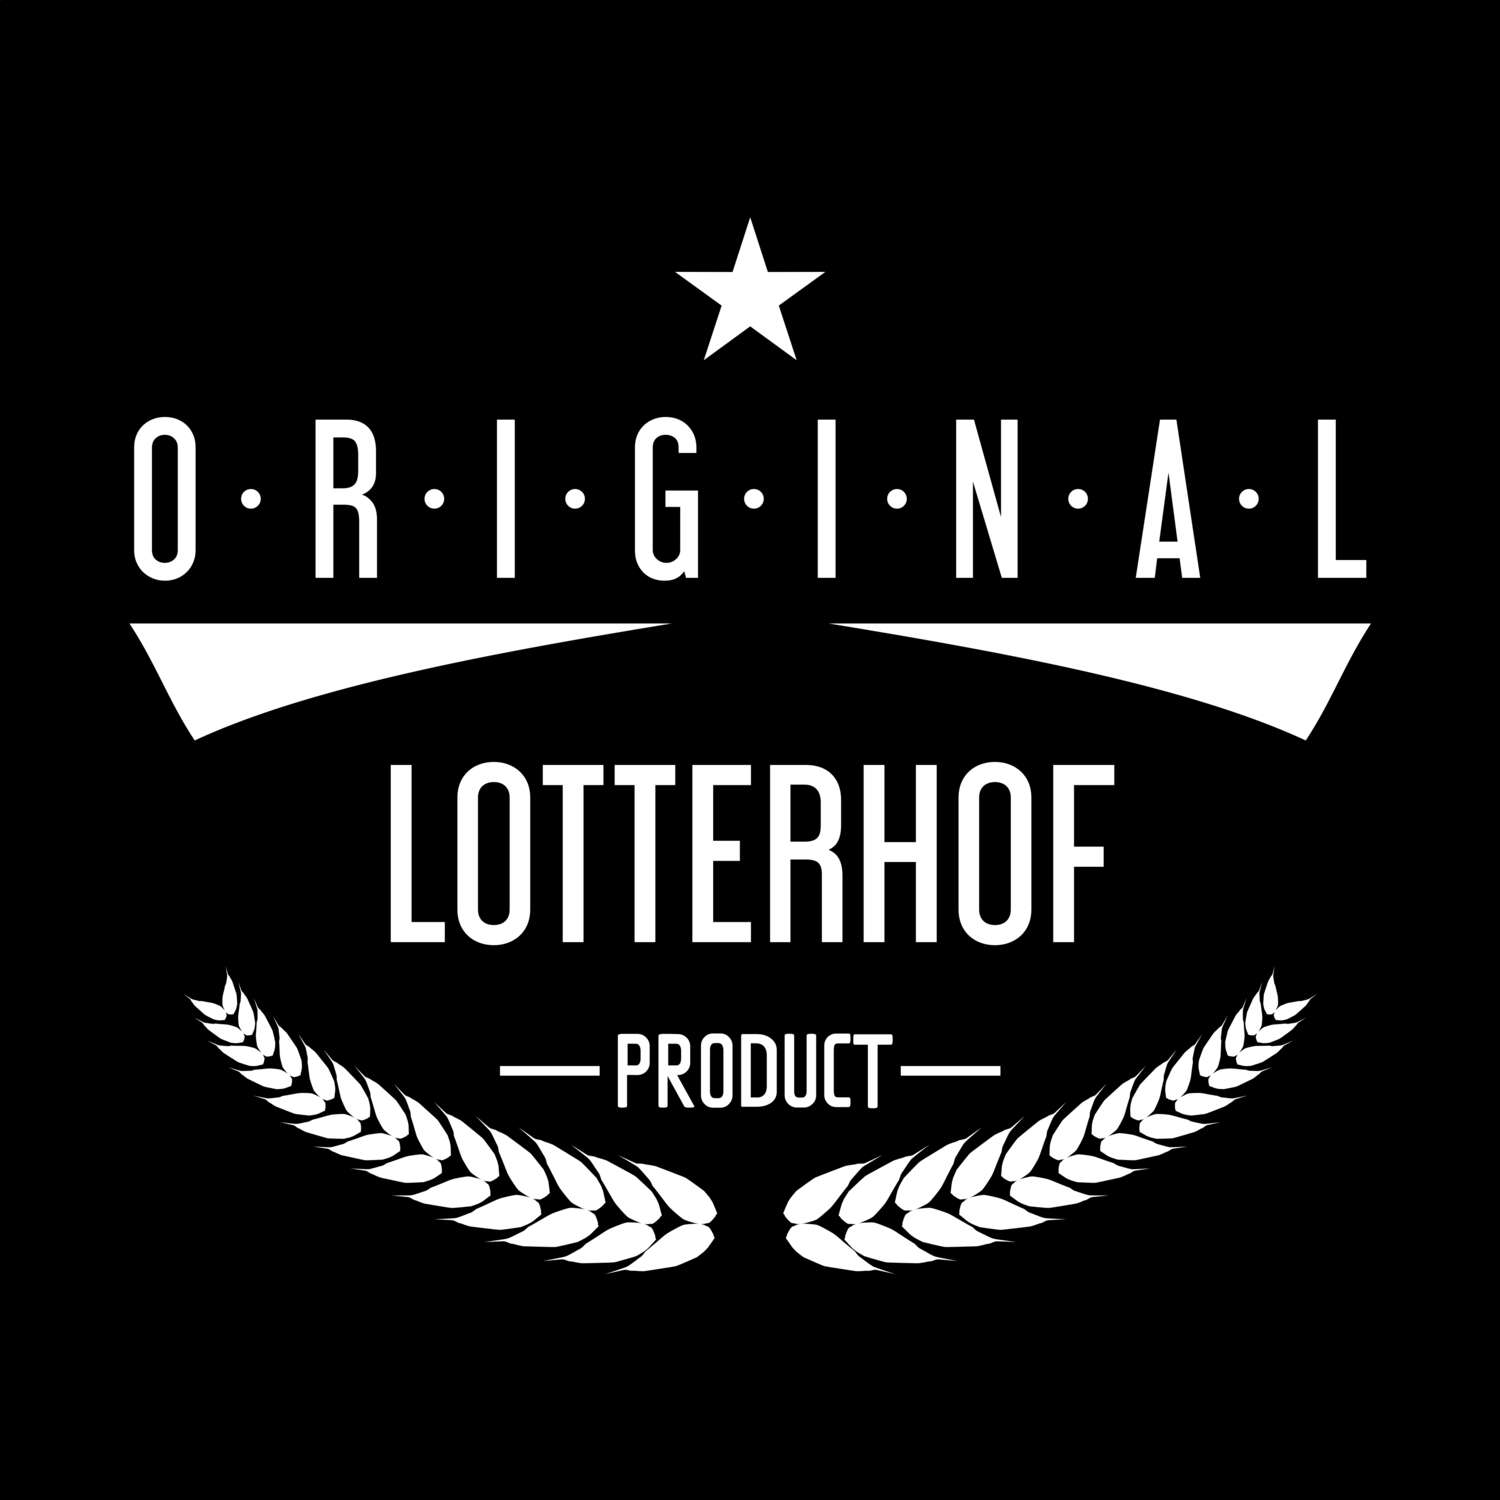 Lotterhof T-Shirt »Original Product«